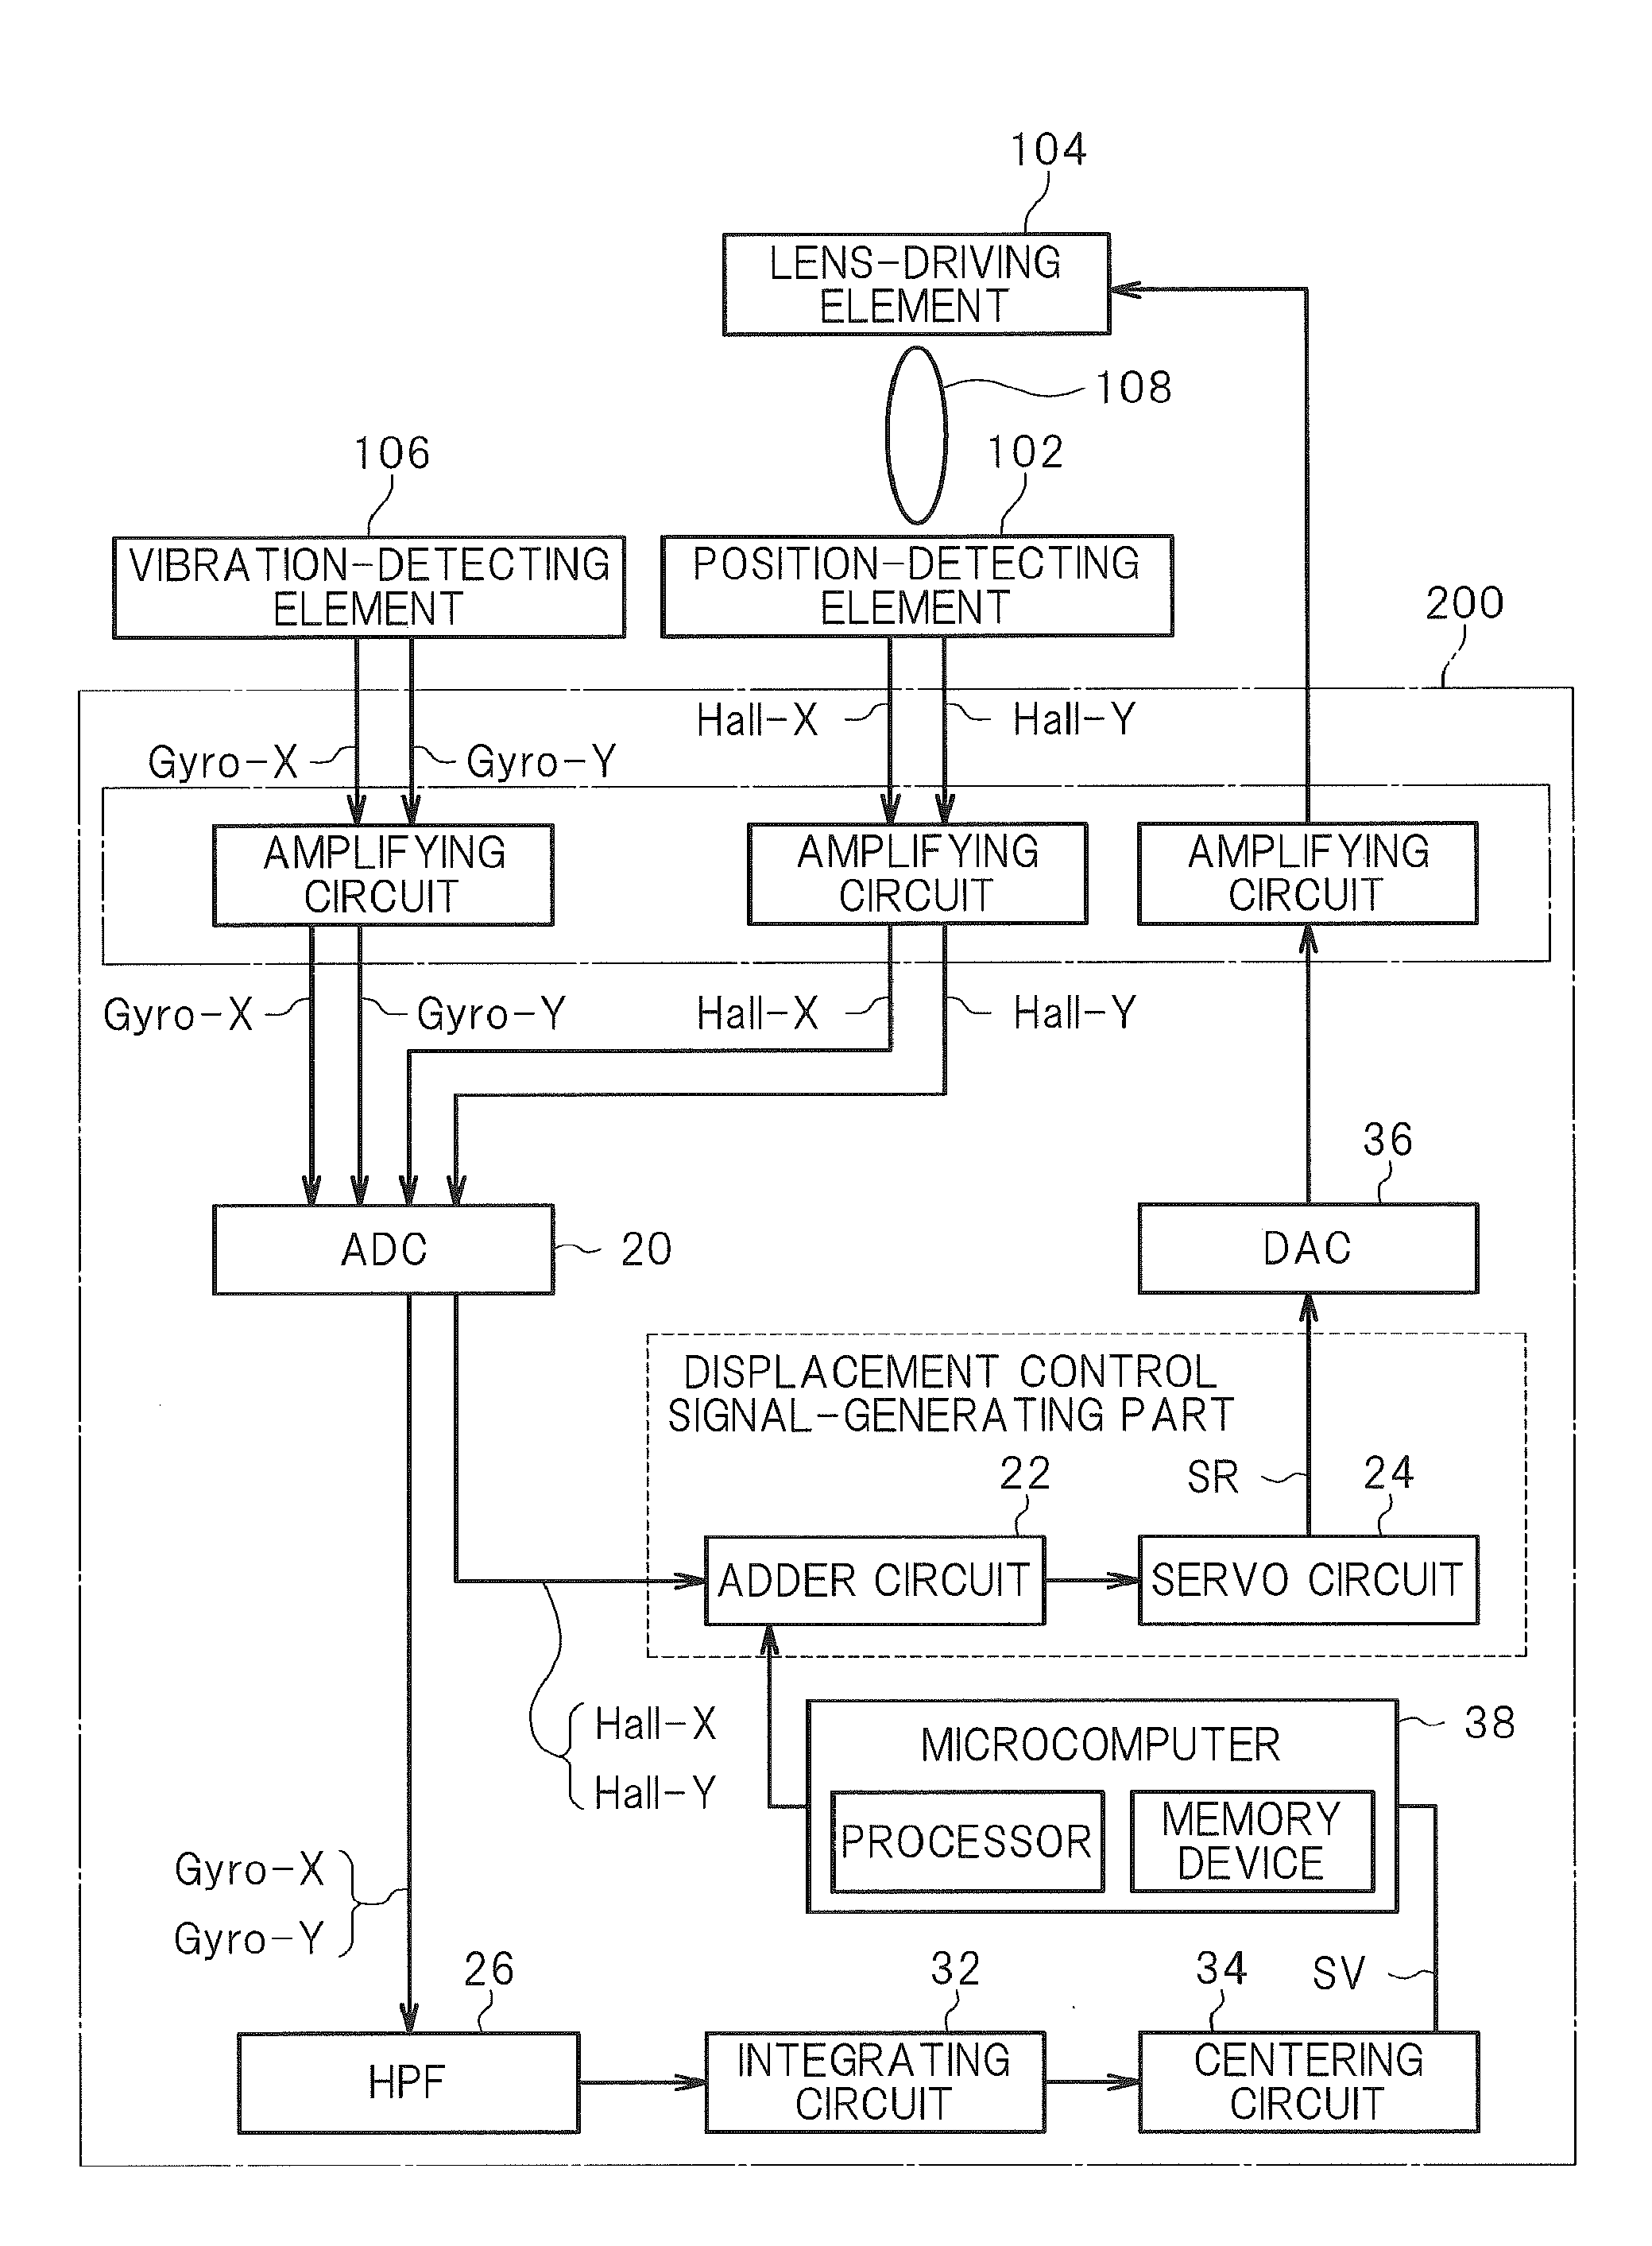 Image stabilization control circuit